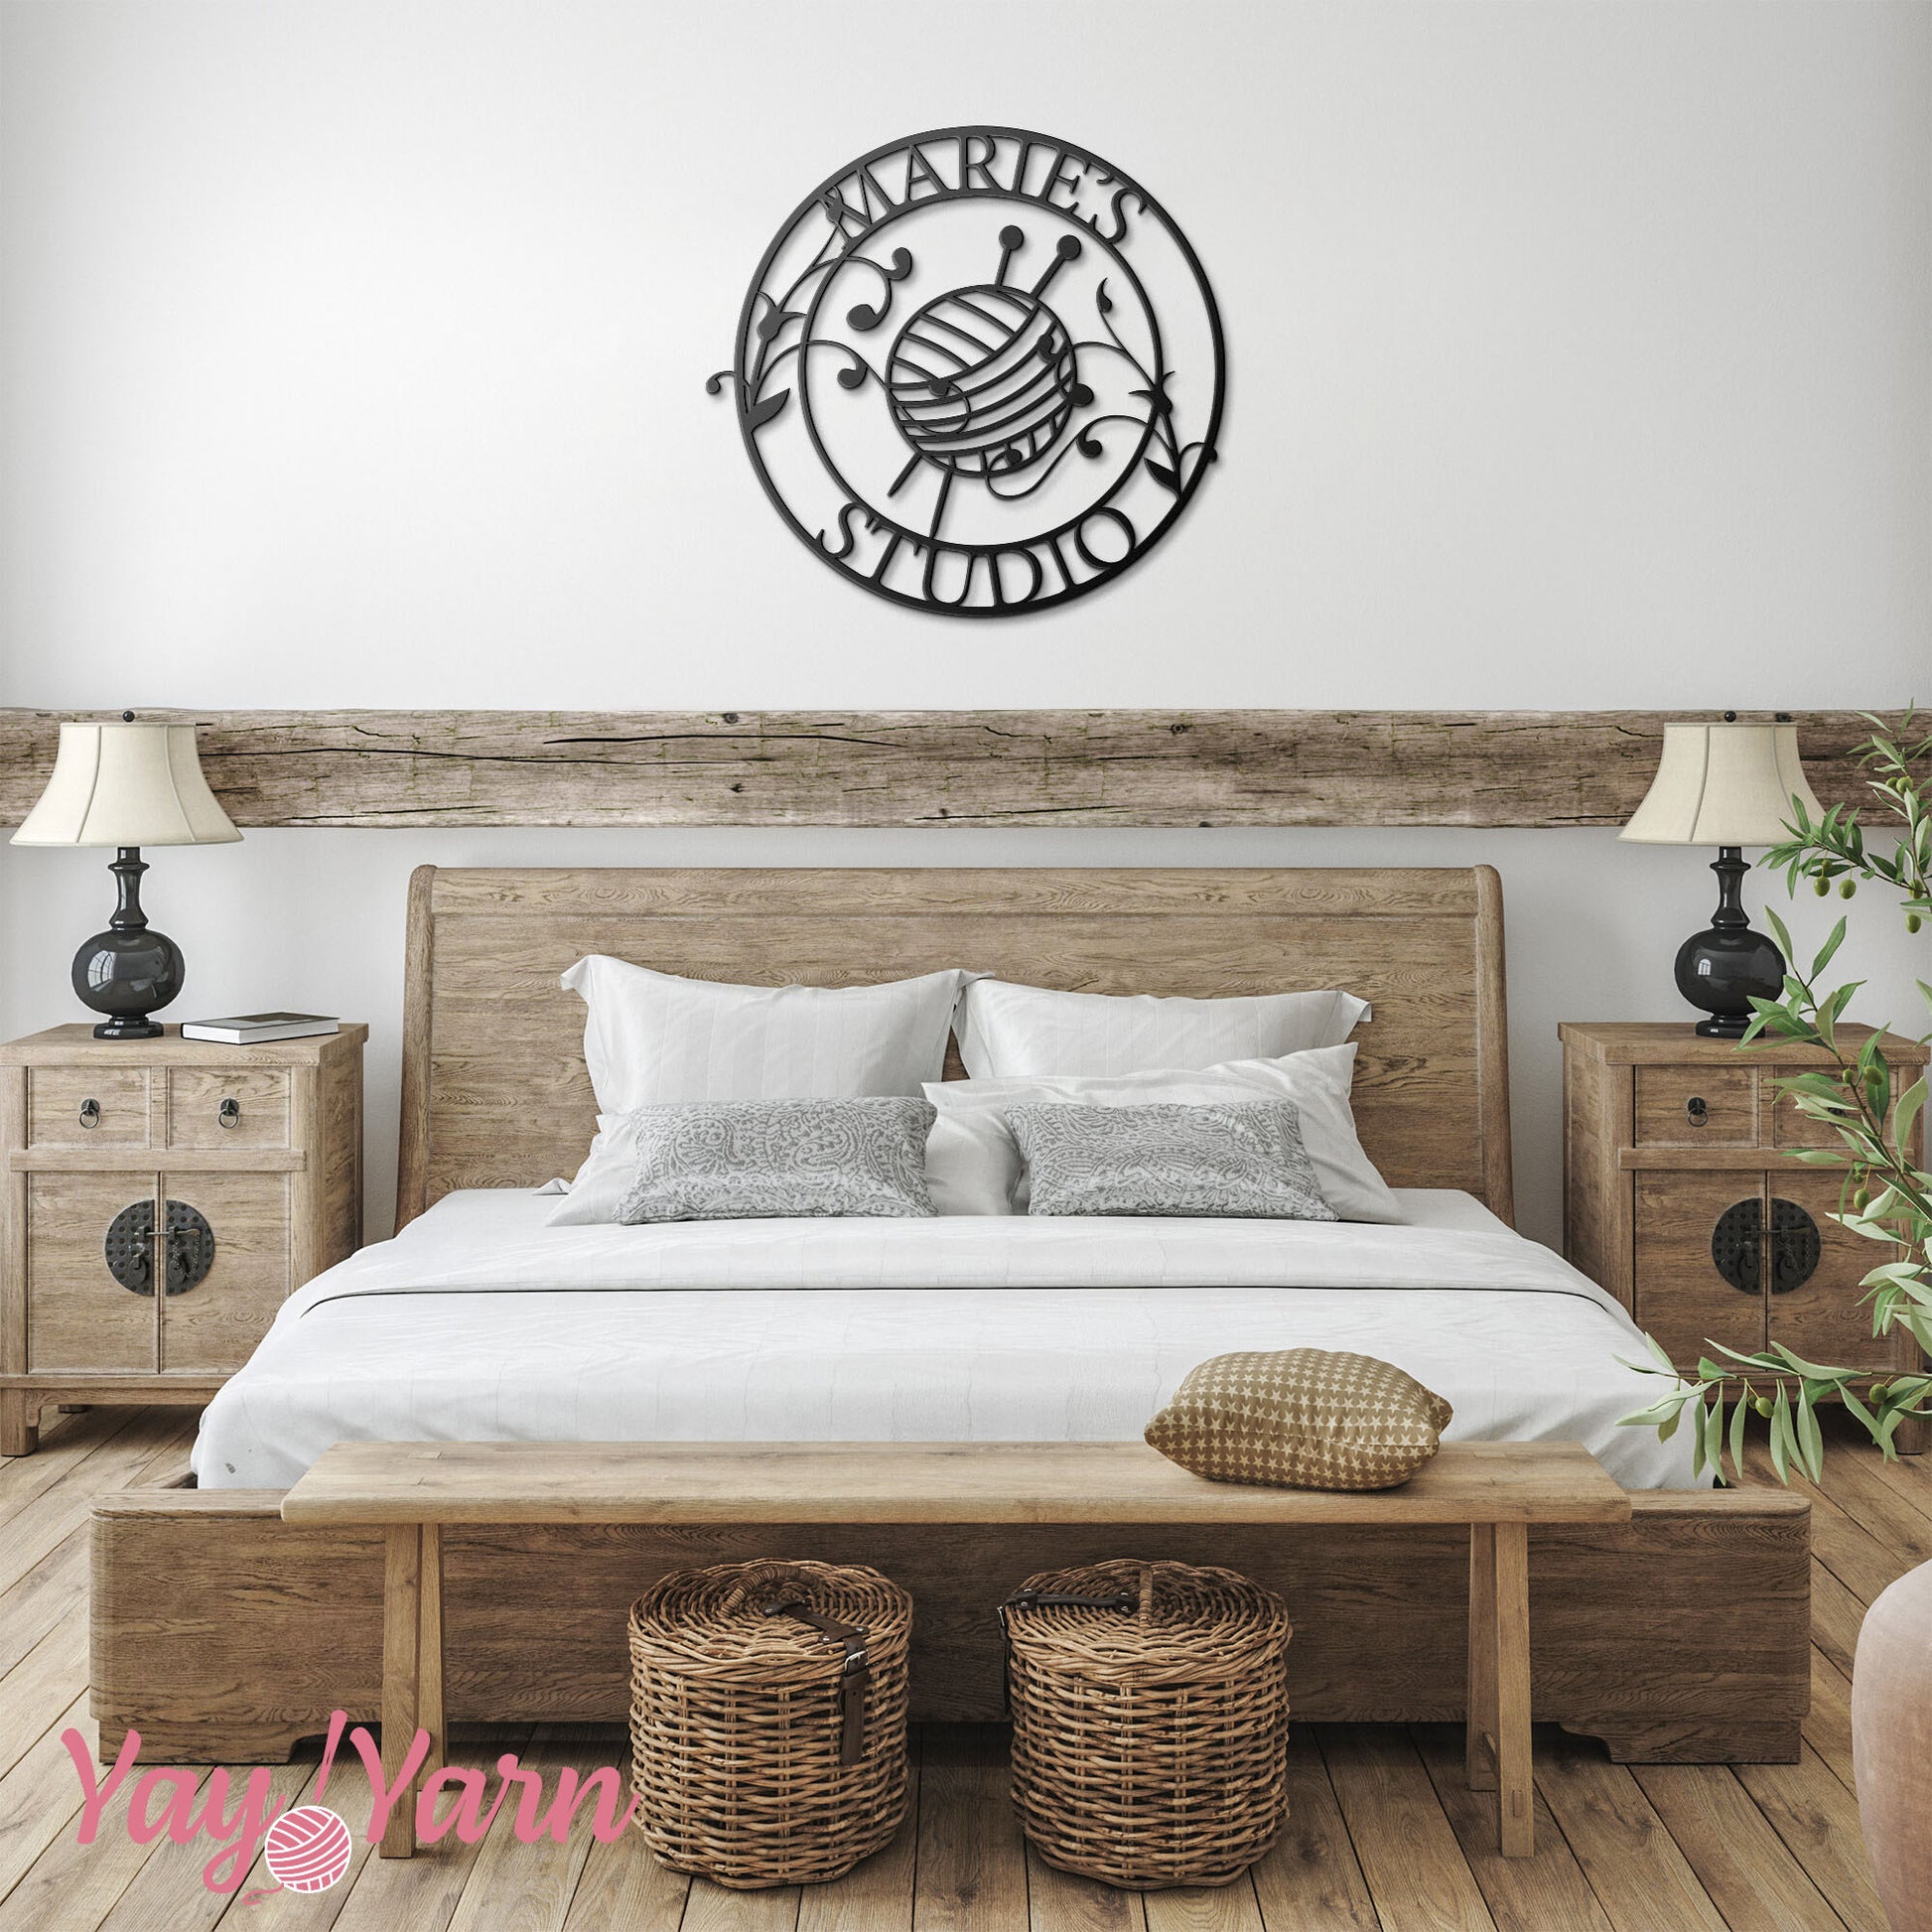 Knitting Studio Metal Wall Art Personalized Black on White Wall Boho Bedroom